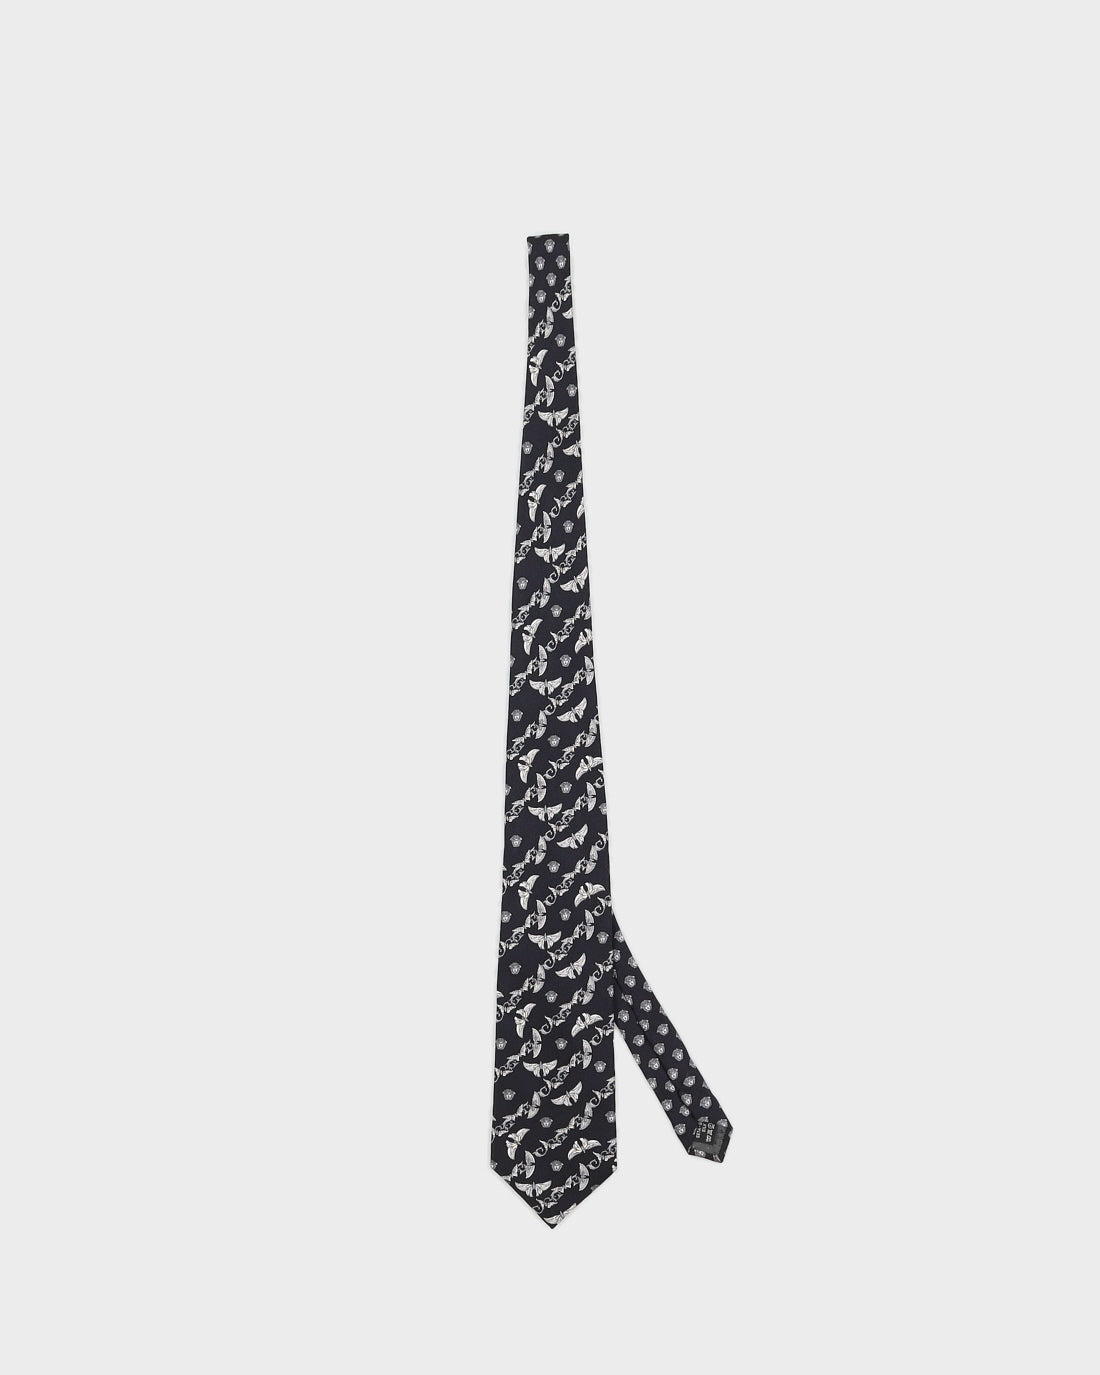 Gianni Versace Black Patterned Tie